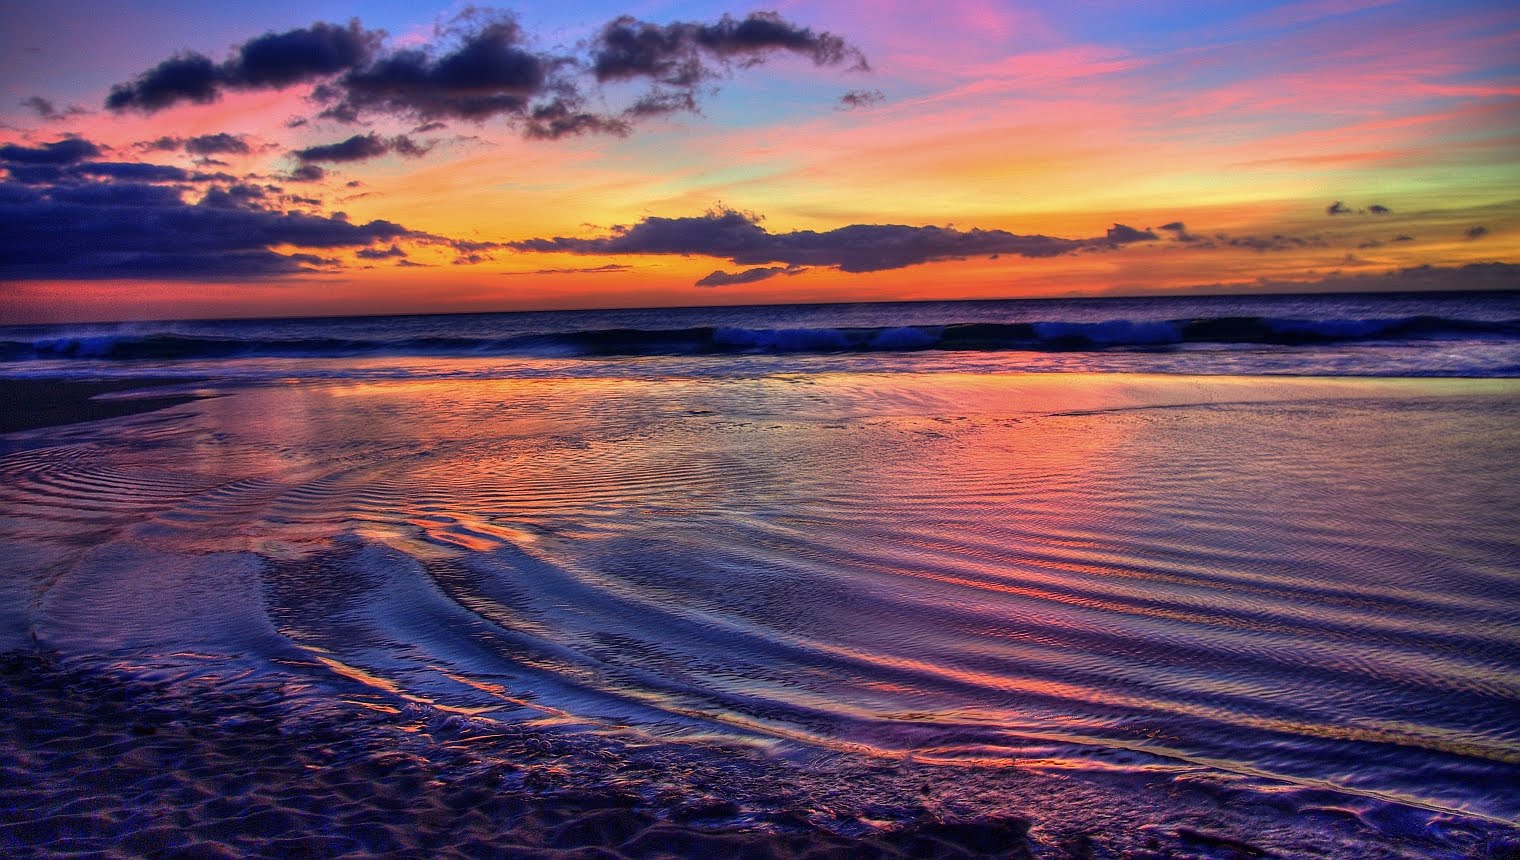 Free download Hawaiian Sunset Wallpaper Hawaiian sunset wallpaper